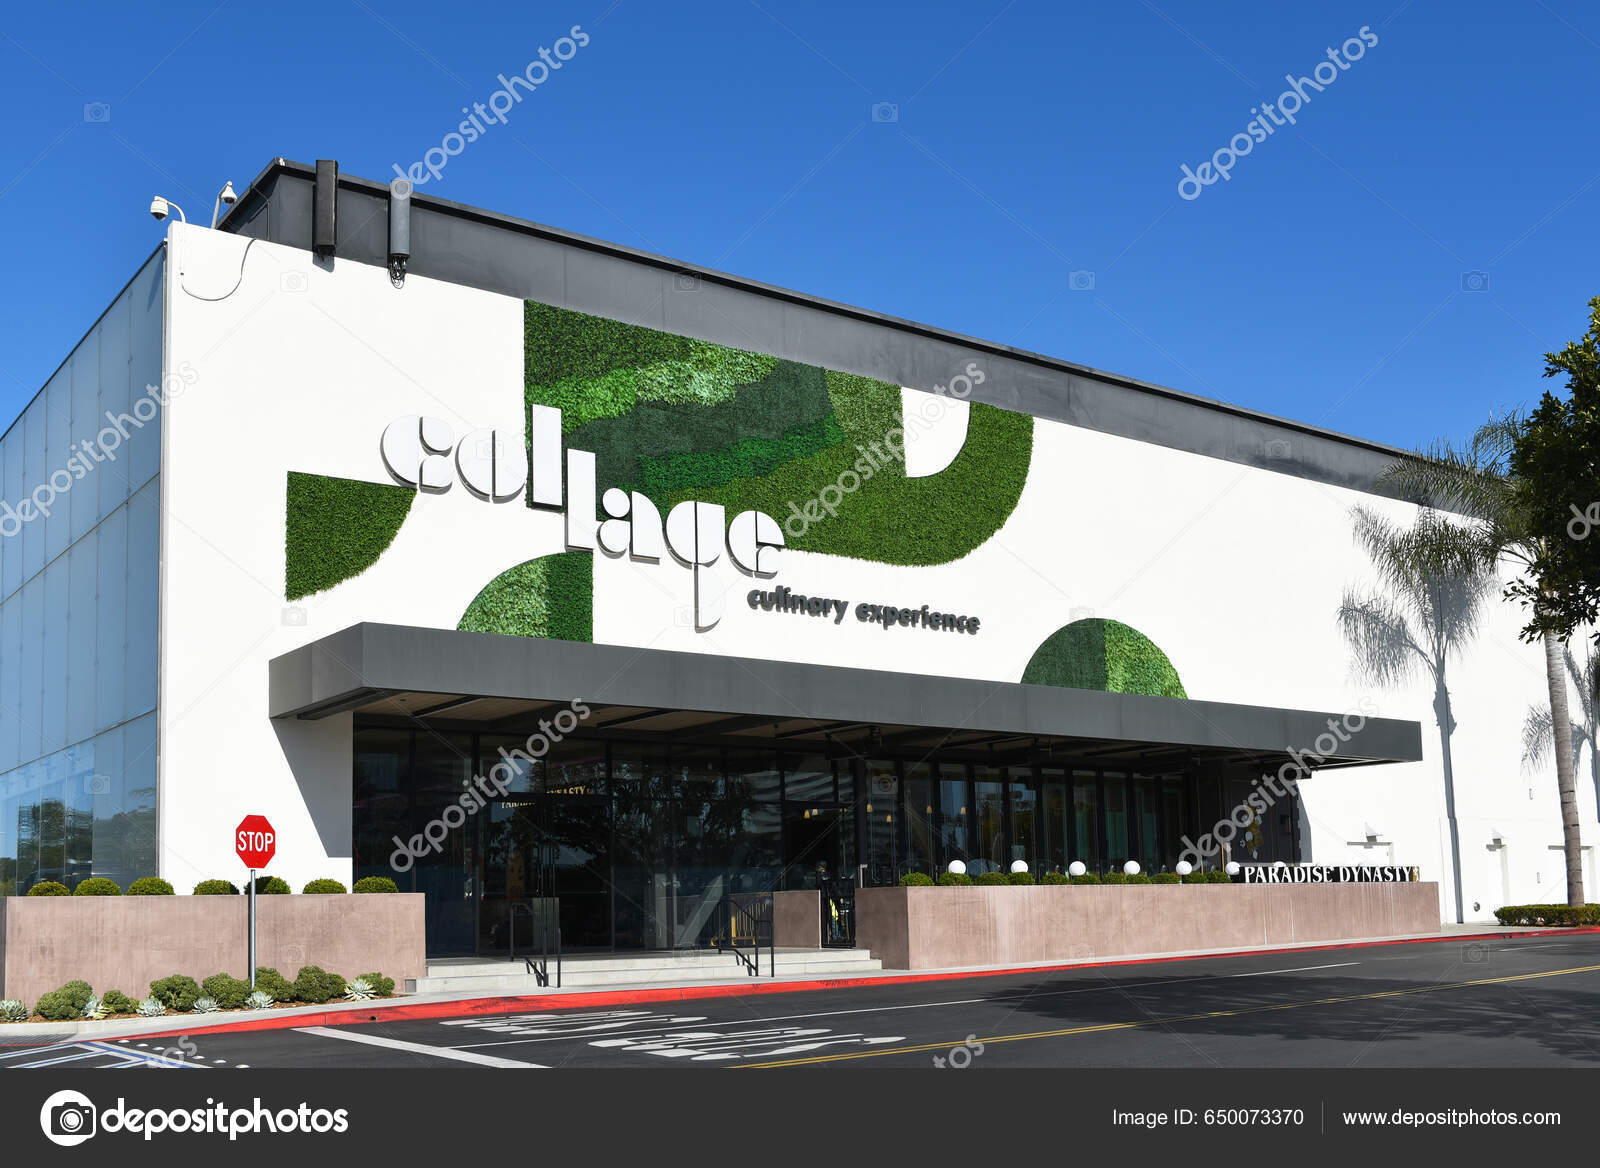 Costa Mesa California Apr 2023 Collage Culinary Experience Elevated Two –  Stock Editorial Photo © scukrov #650073370